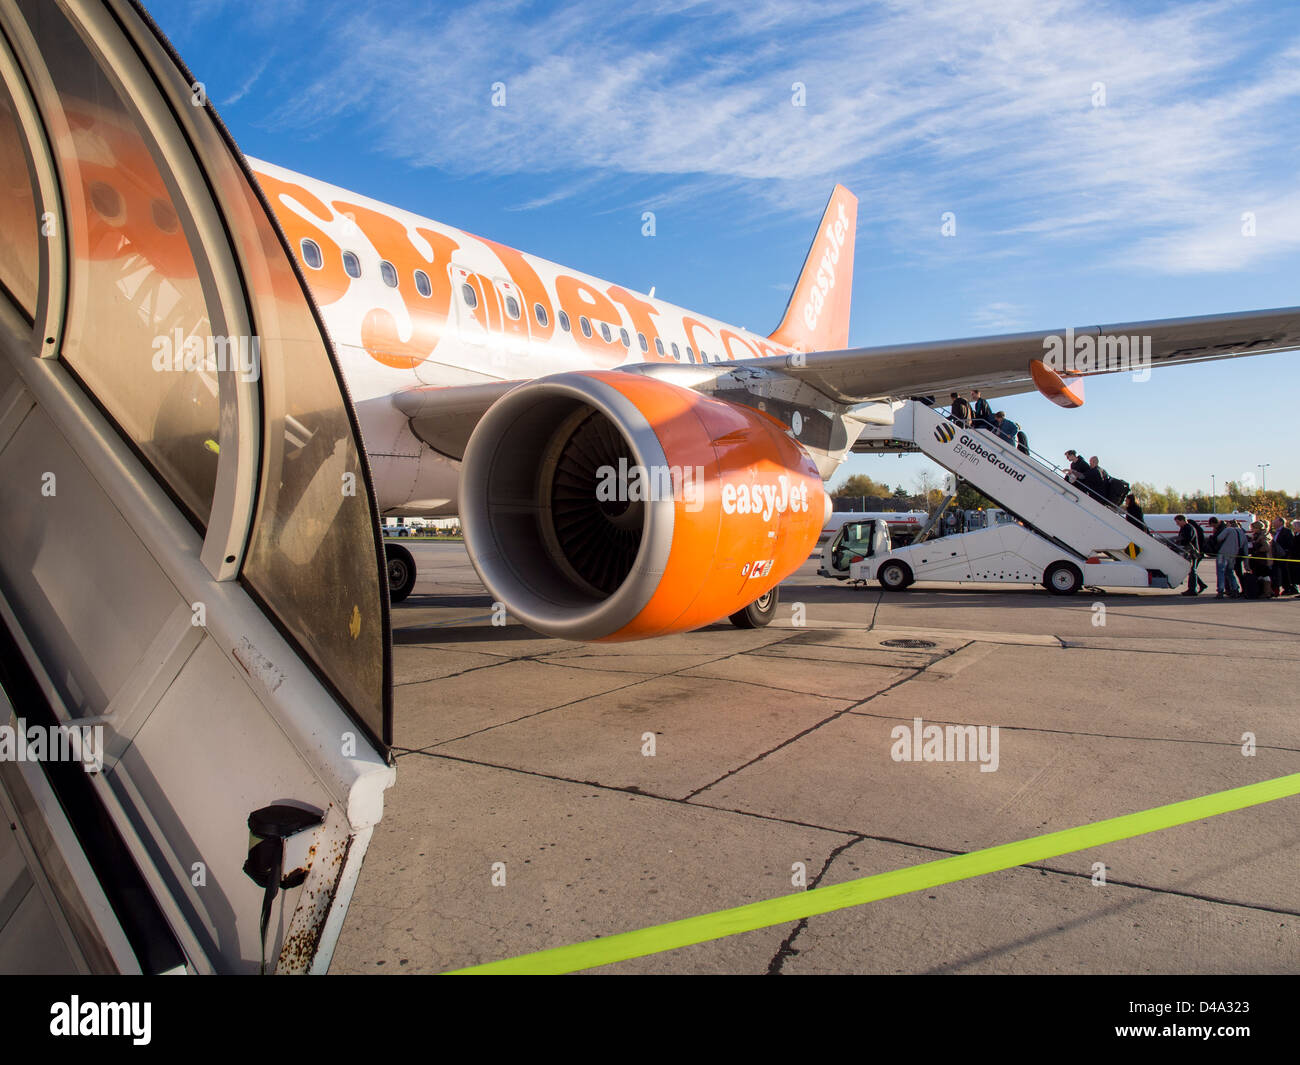 Passengers boarding an easy jet plane Stock Photo - Alamy